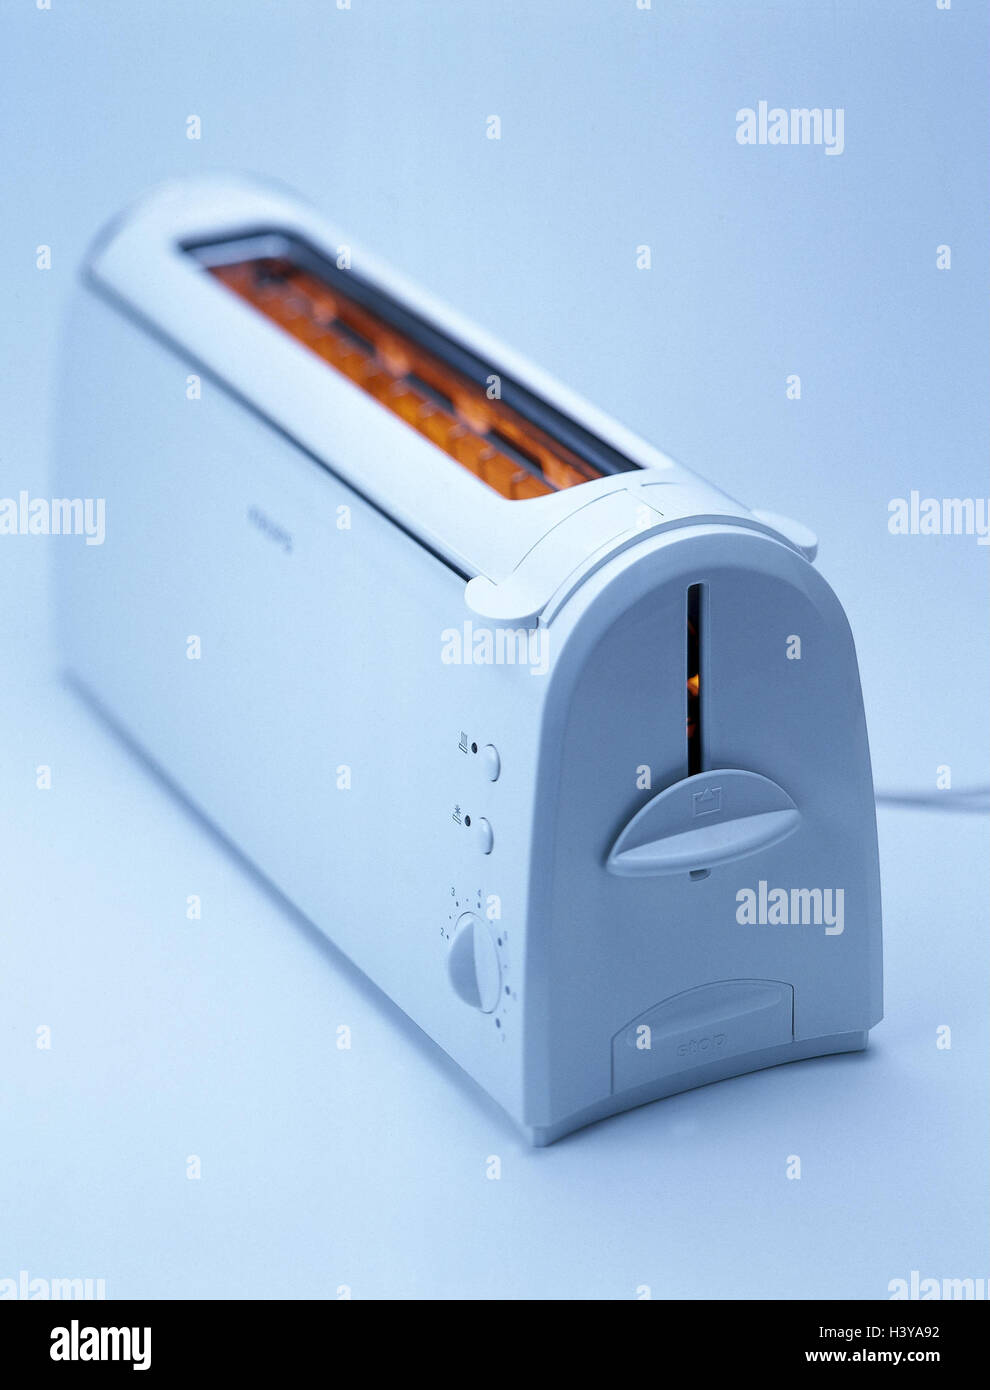 https://c8.alamy.com/comp/H3YA92/toasters-roast-drink-of-a-toast-still-life-studio-product-photography-H3YA92.jpg